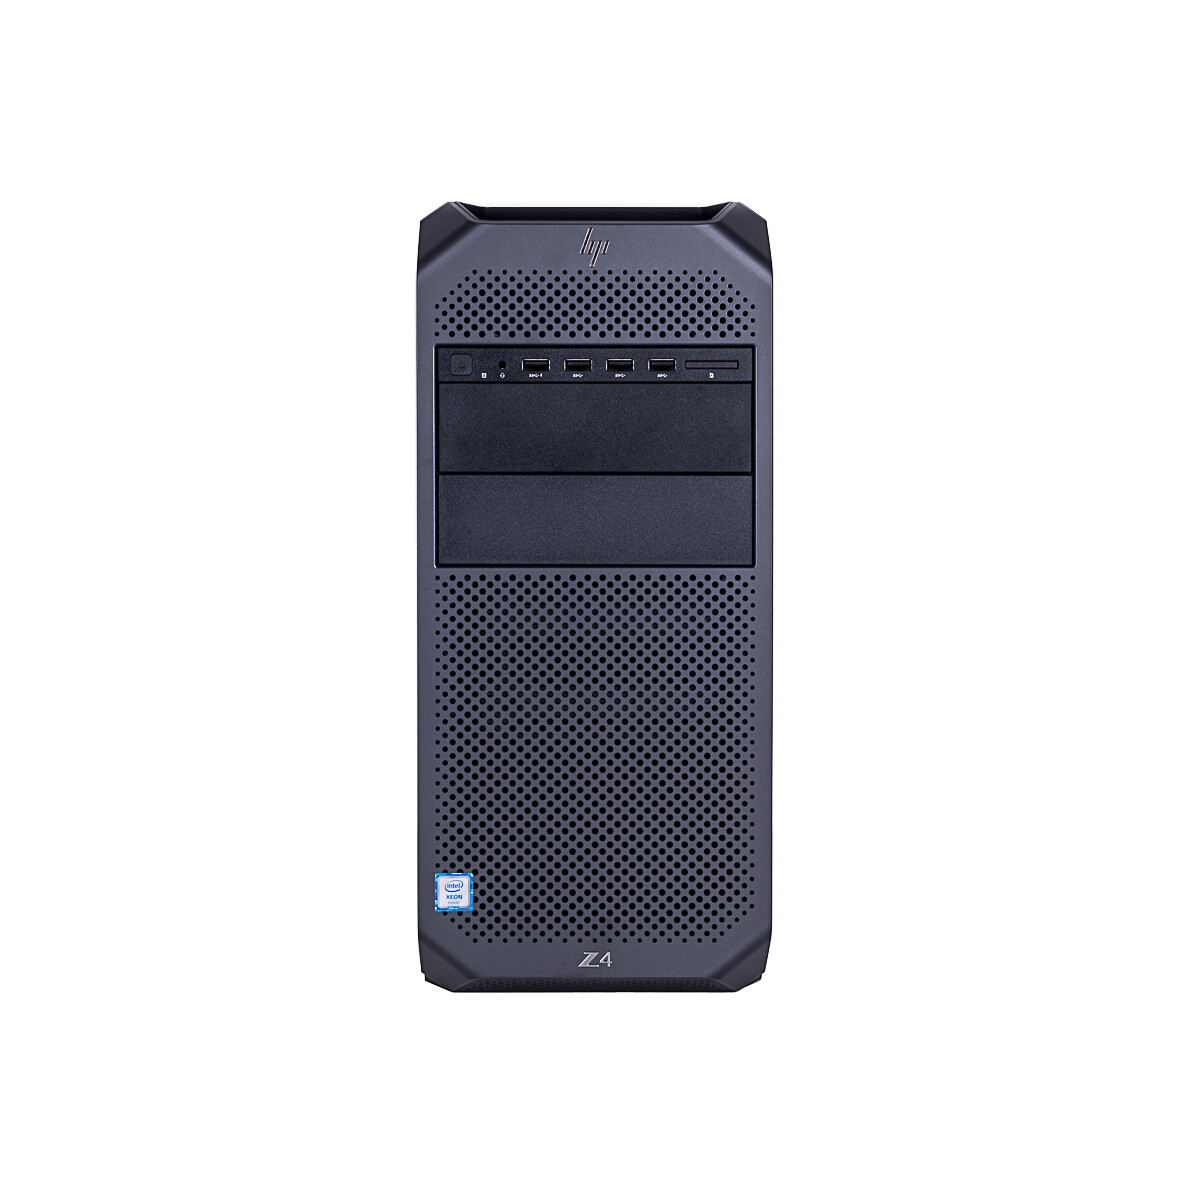 HP Z4 G4 Business Workstation Intel Xeon 10-Core W-2155, max. 4.50GHz, 64GB DDR4, 1TB M.2 SSD, NVIDIA Quadro P4000, 8GB, WIN 10 Pro 